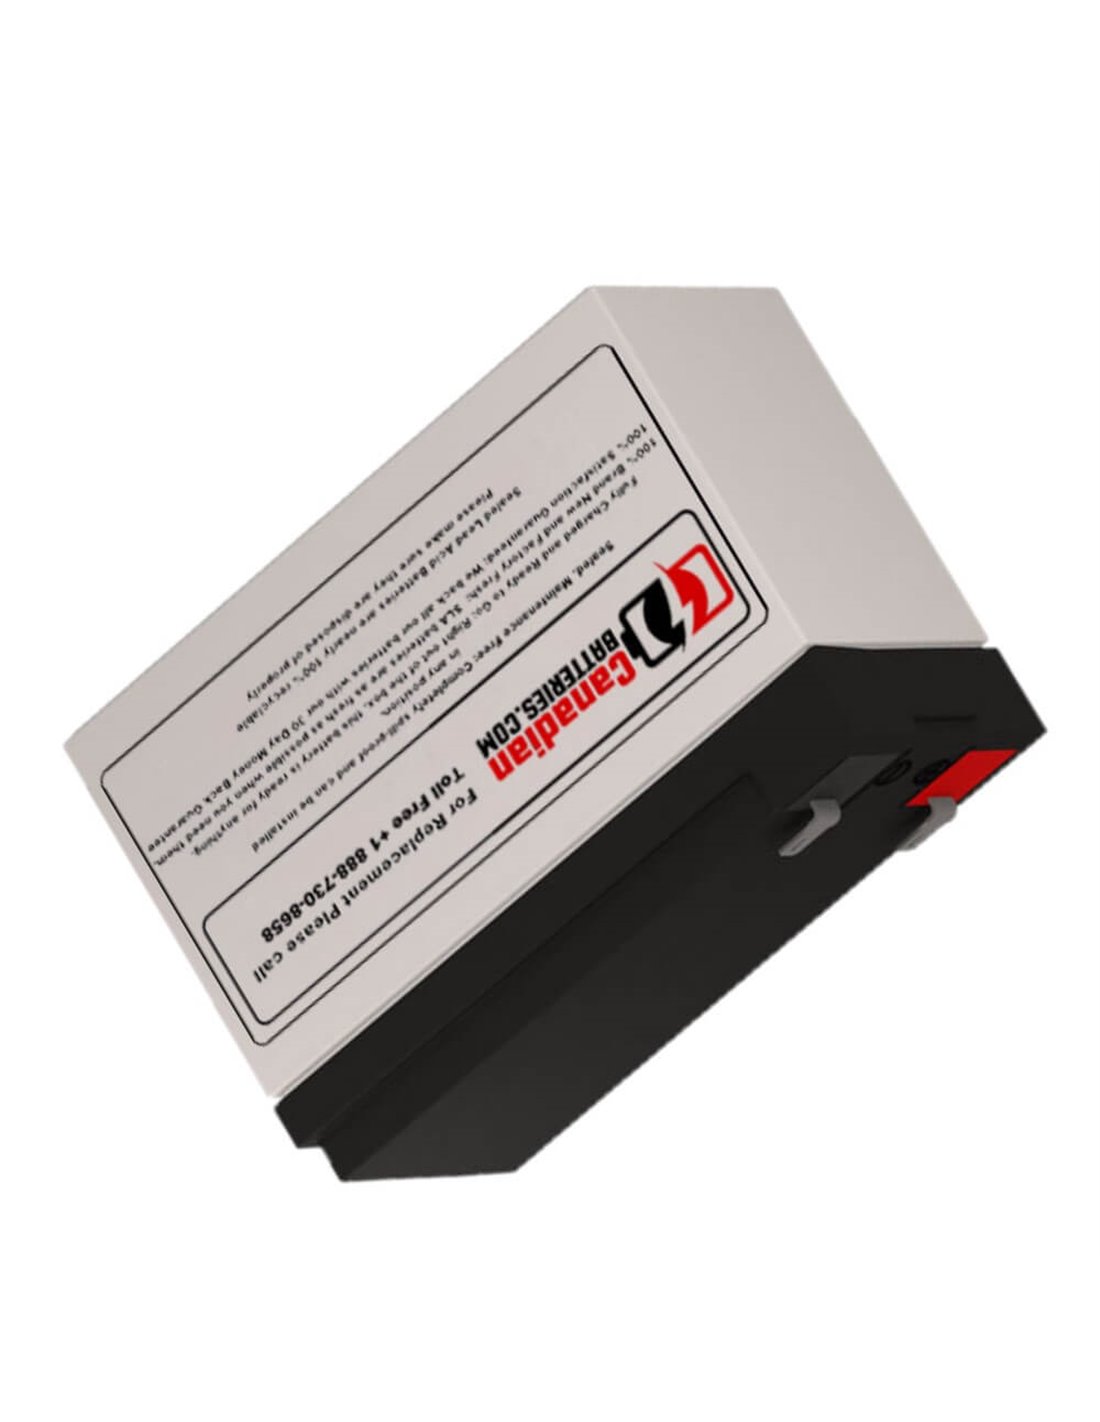 Battery for Best Technologies Btg-0301 UPS, 1 x 12V, 7Ah - 84Wh